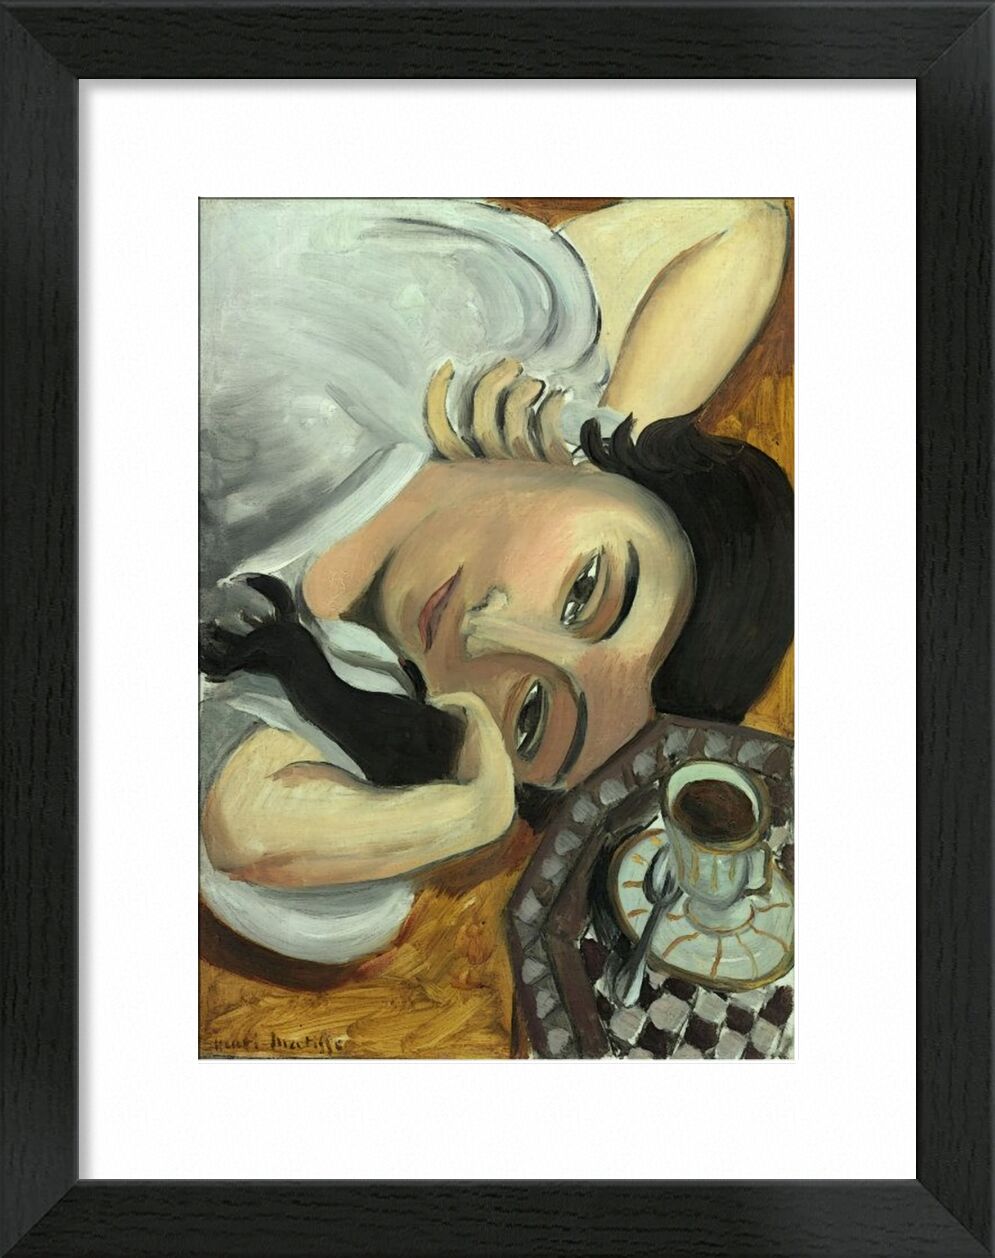 Lorette with Cup of Coffee, 1917 - Henri Matisse desde Bellas artes, Prodi Art, Matisse, café, bar, cocina, mujer, marrón